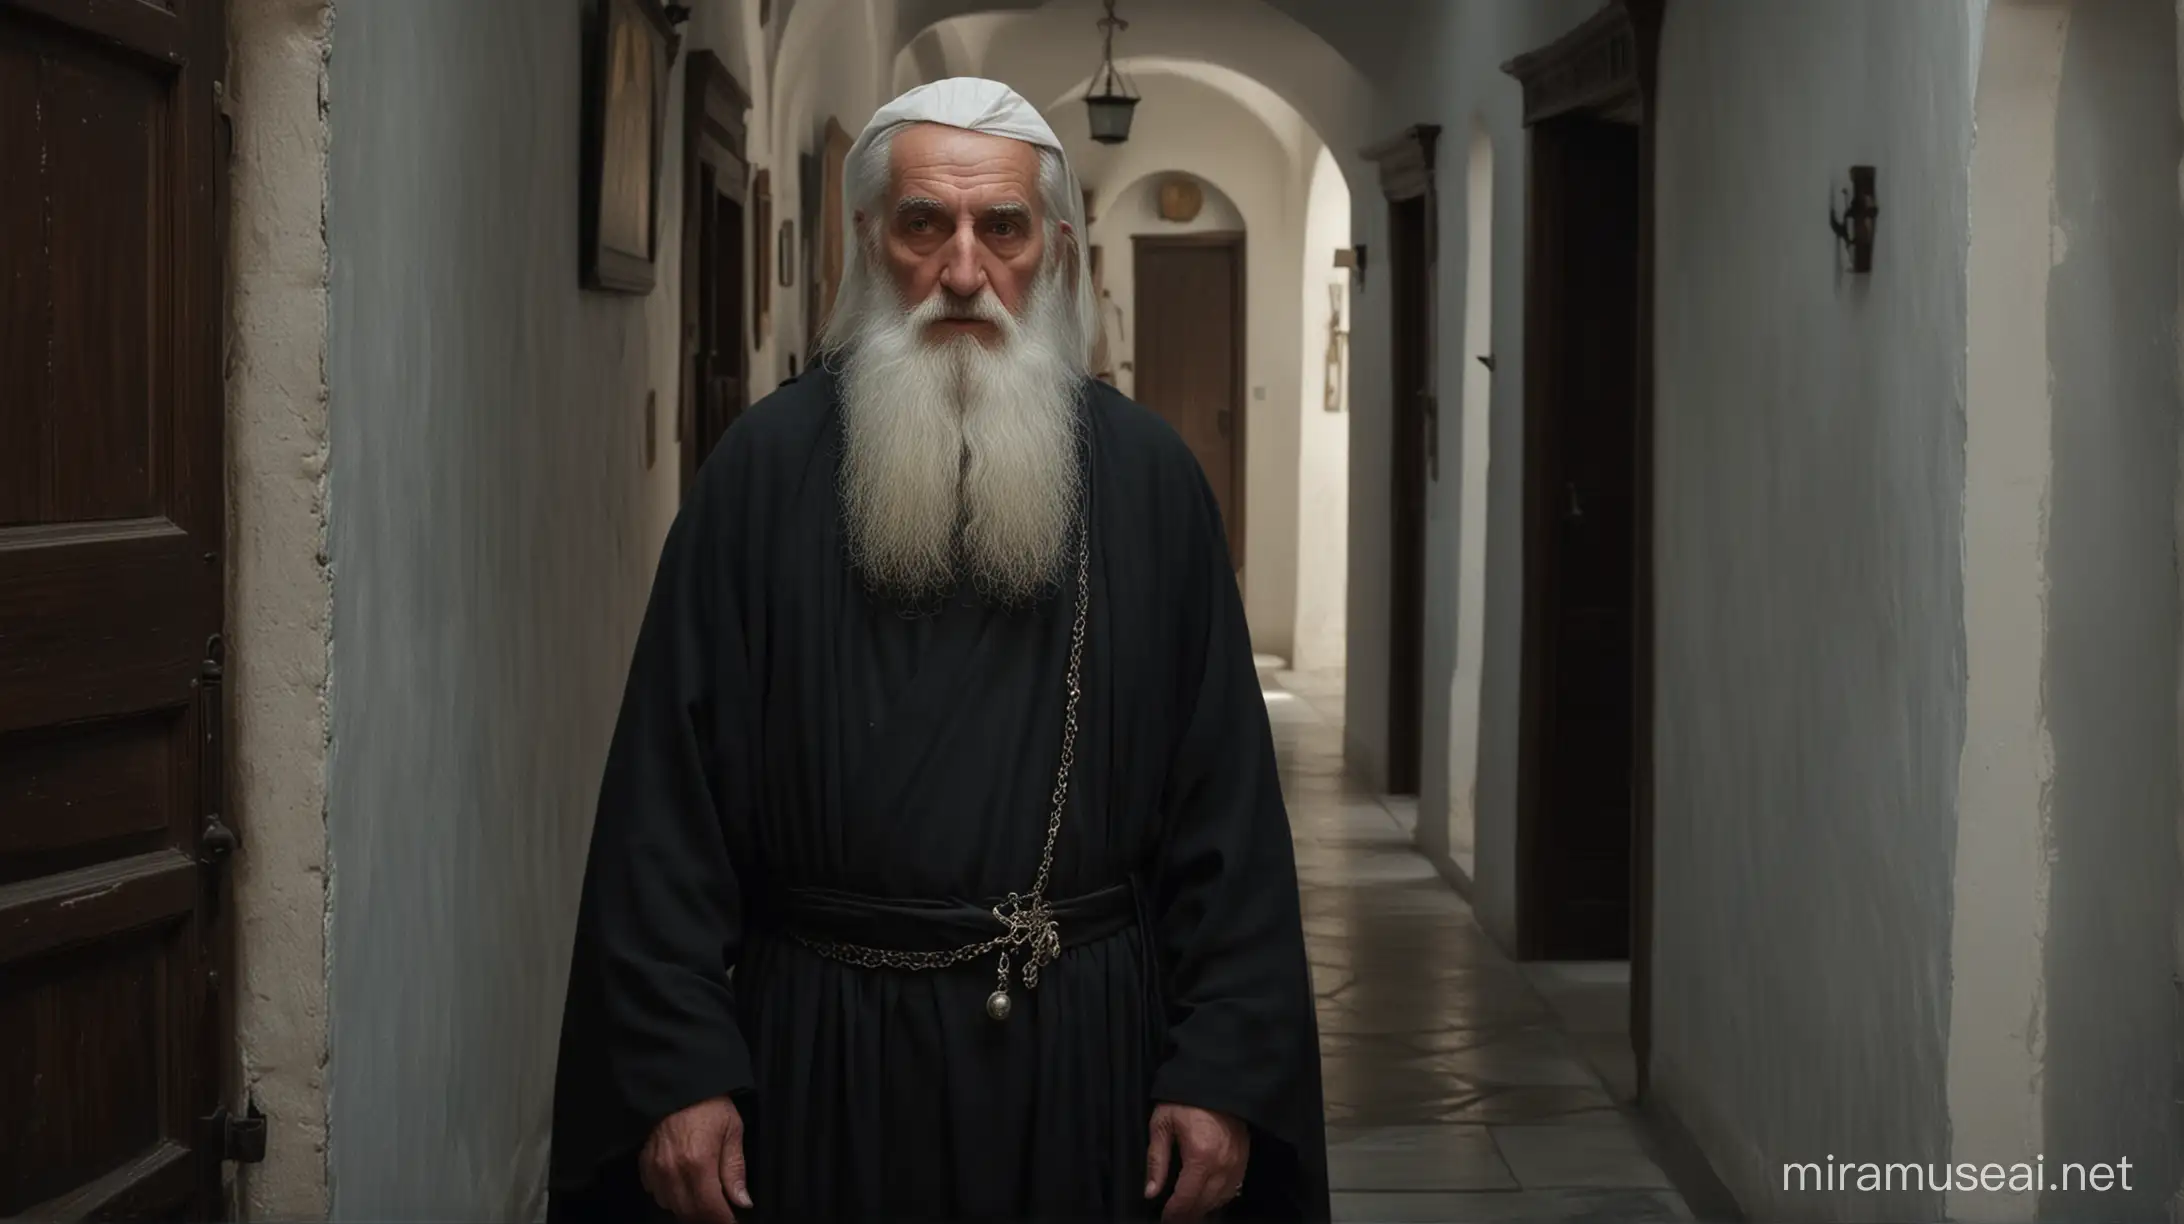 Saint Kosmas of Aetolia Historical Portrait in Greek Orthodox Monastery Hallway